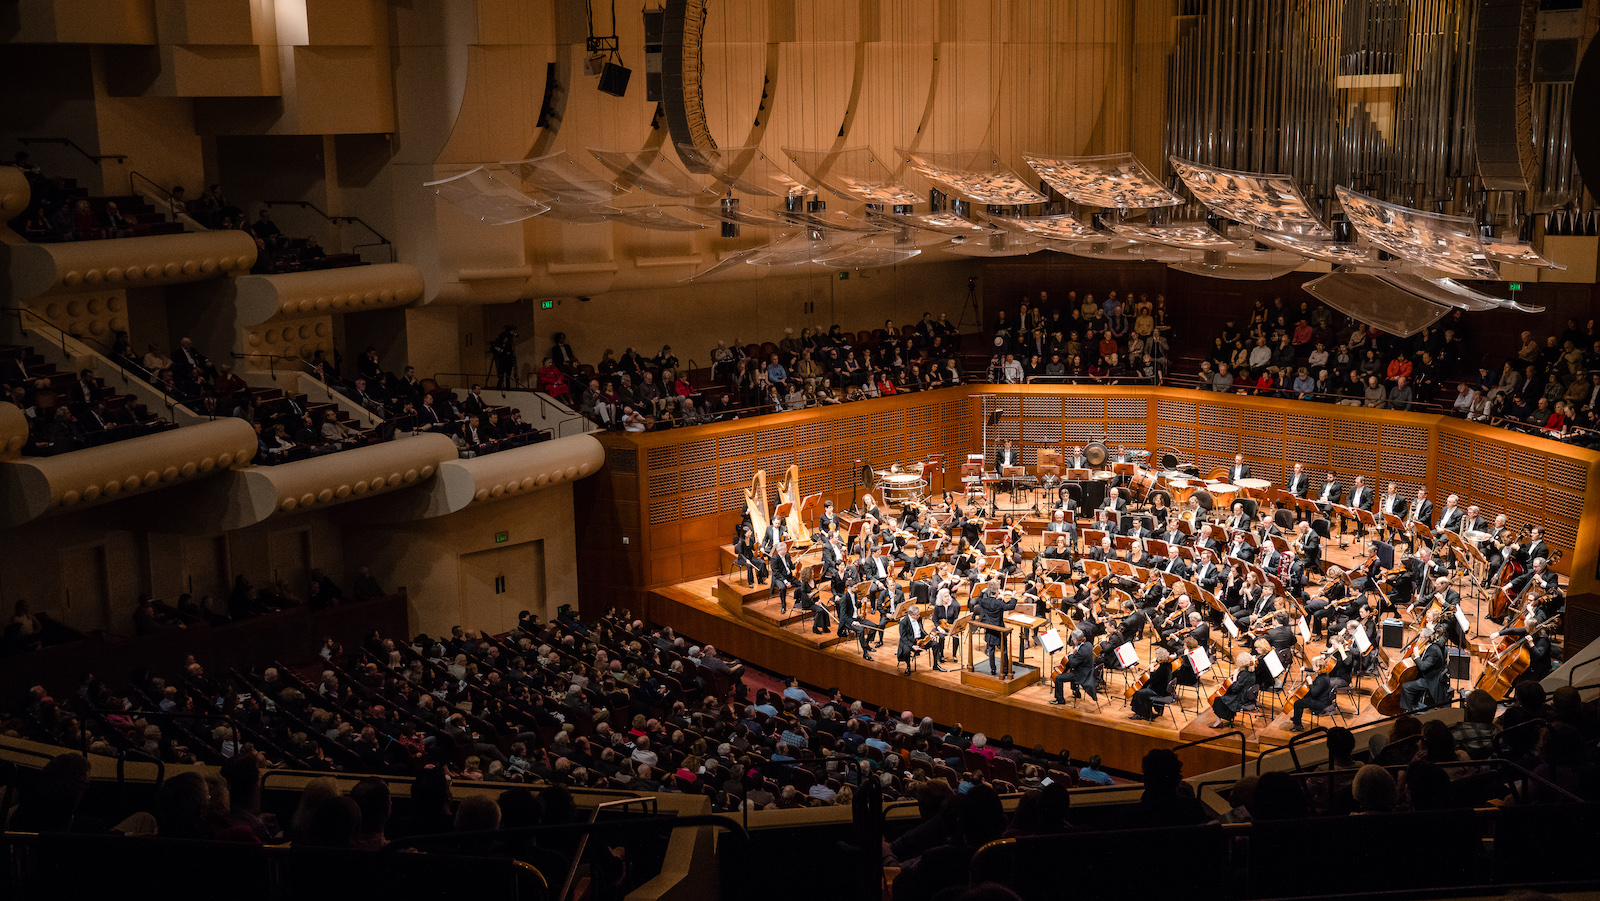 Concert Hall at SF Symphony